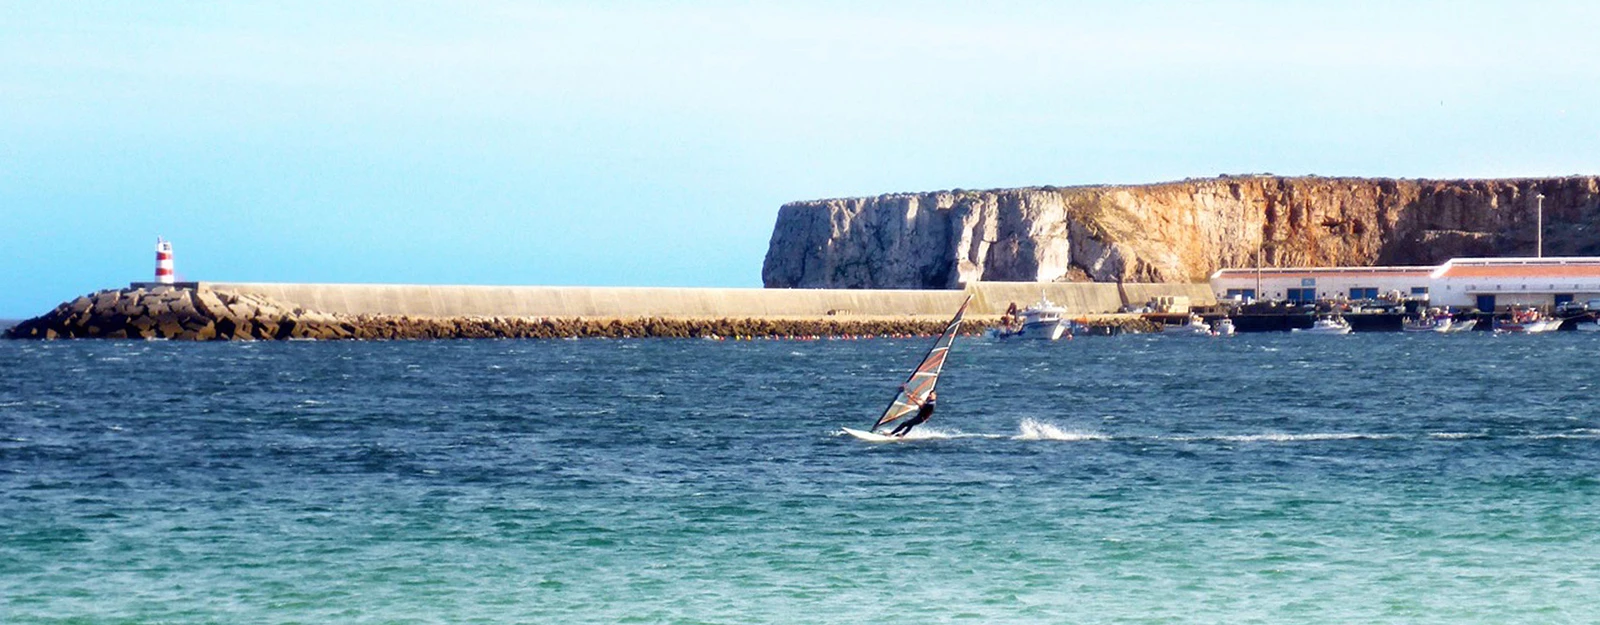 Windsurfen in Sankt Martinal in Portugal